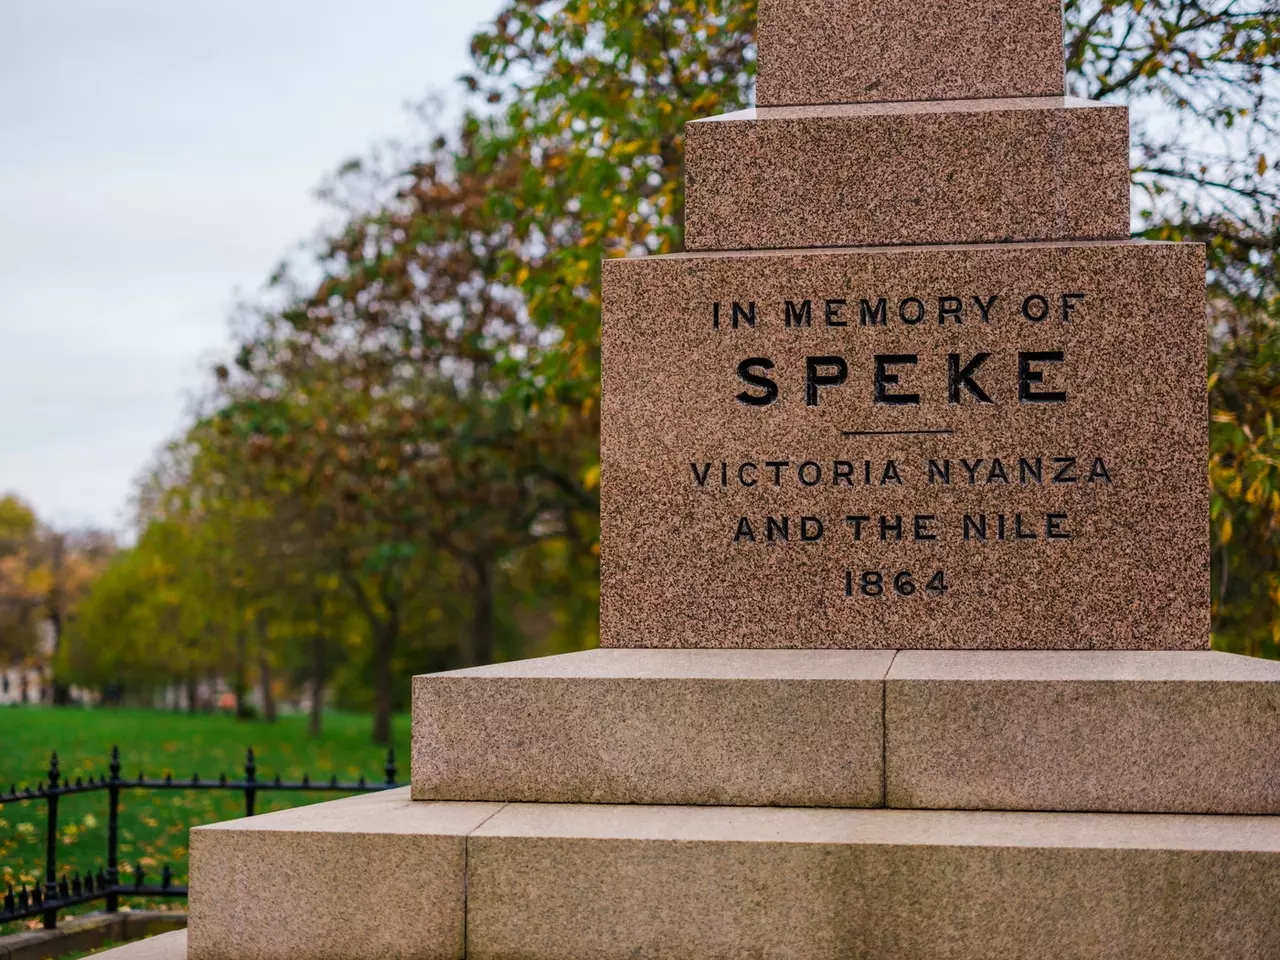 Speke monument in Kensington Gardens